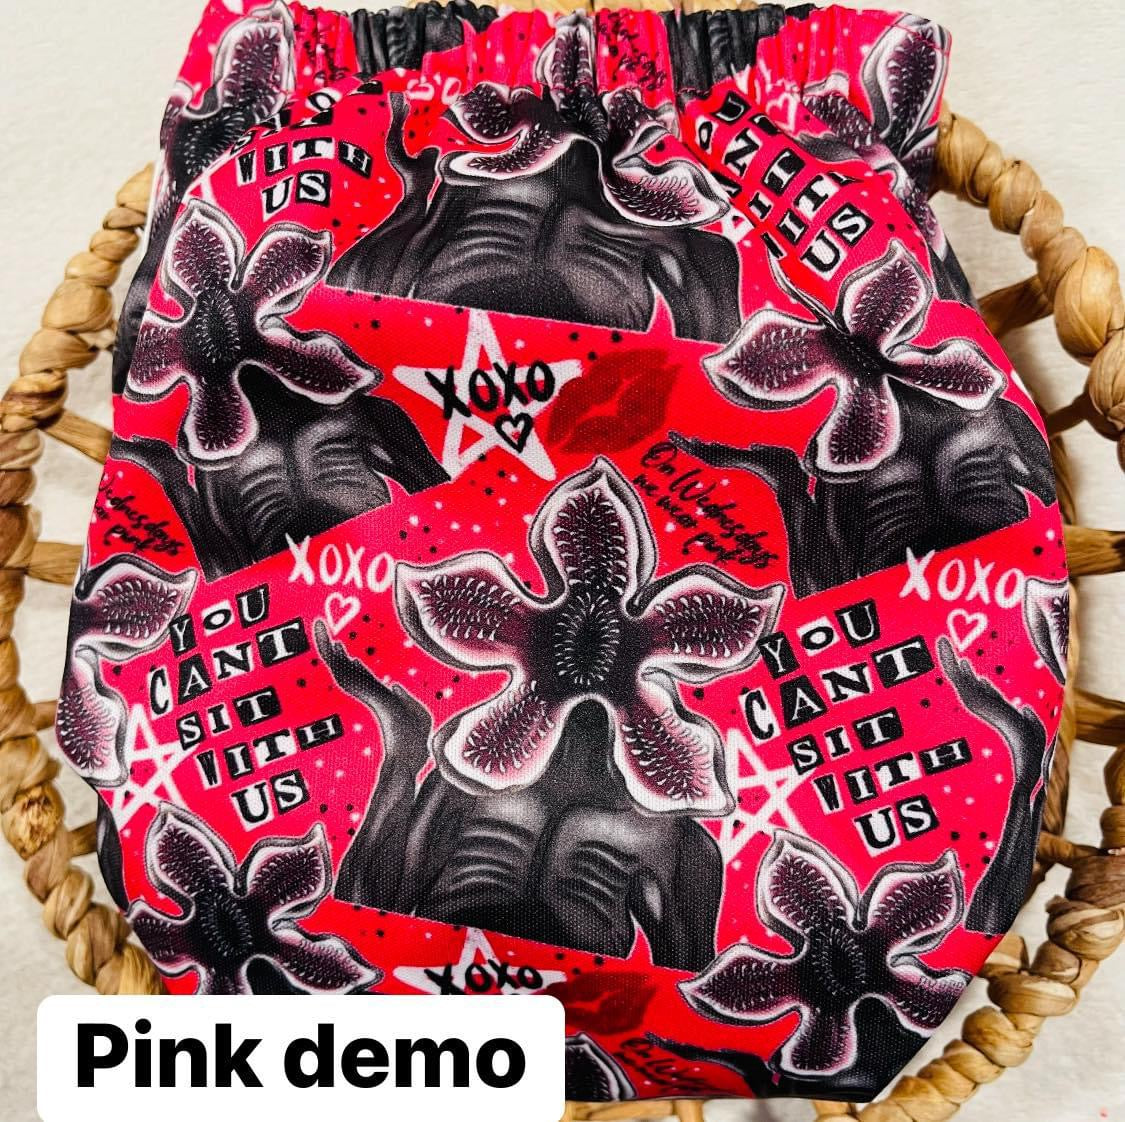 Pink Demo